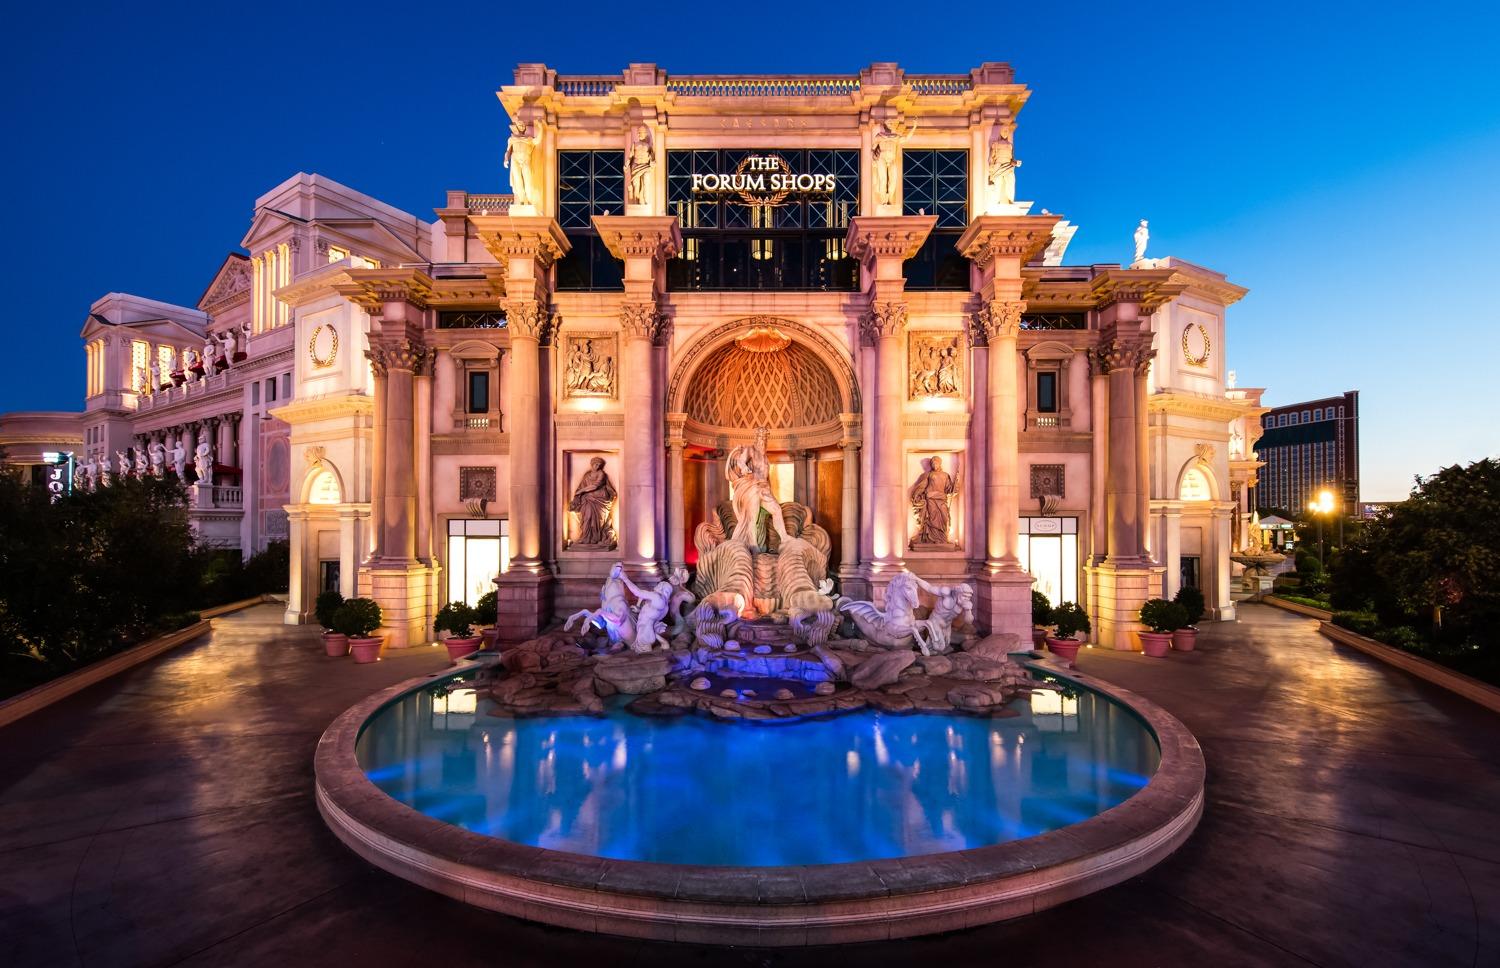 Louis Vuitton Las Vegas Caesars Forum, 3500 Las Vegas Boulevard South,  Space #B-15, Las Vegas, NV, Clothing Retail - MapQuest